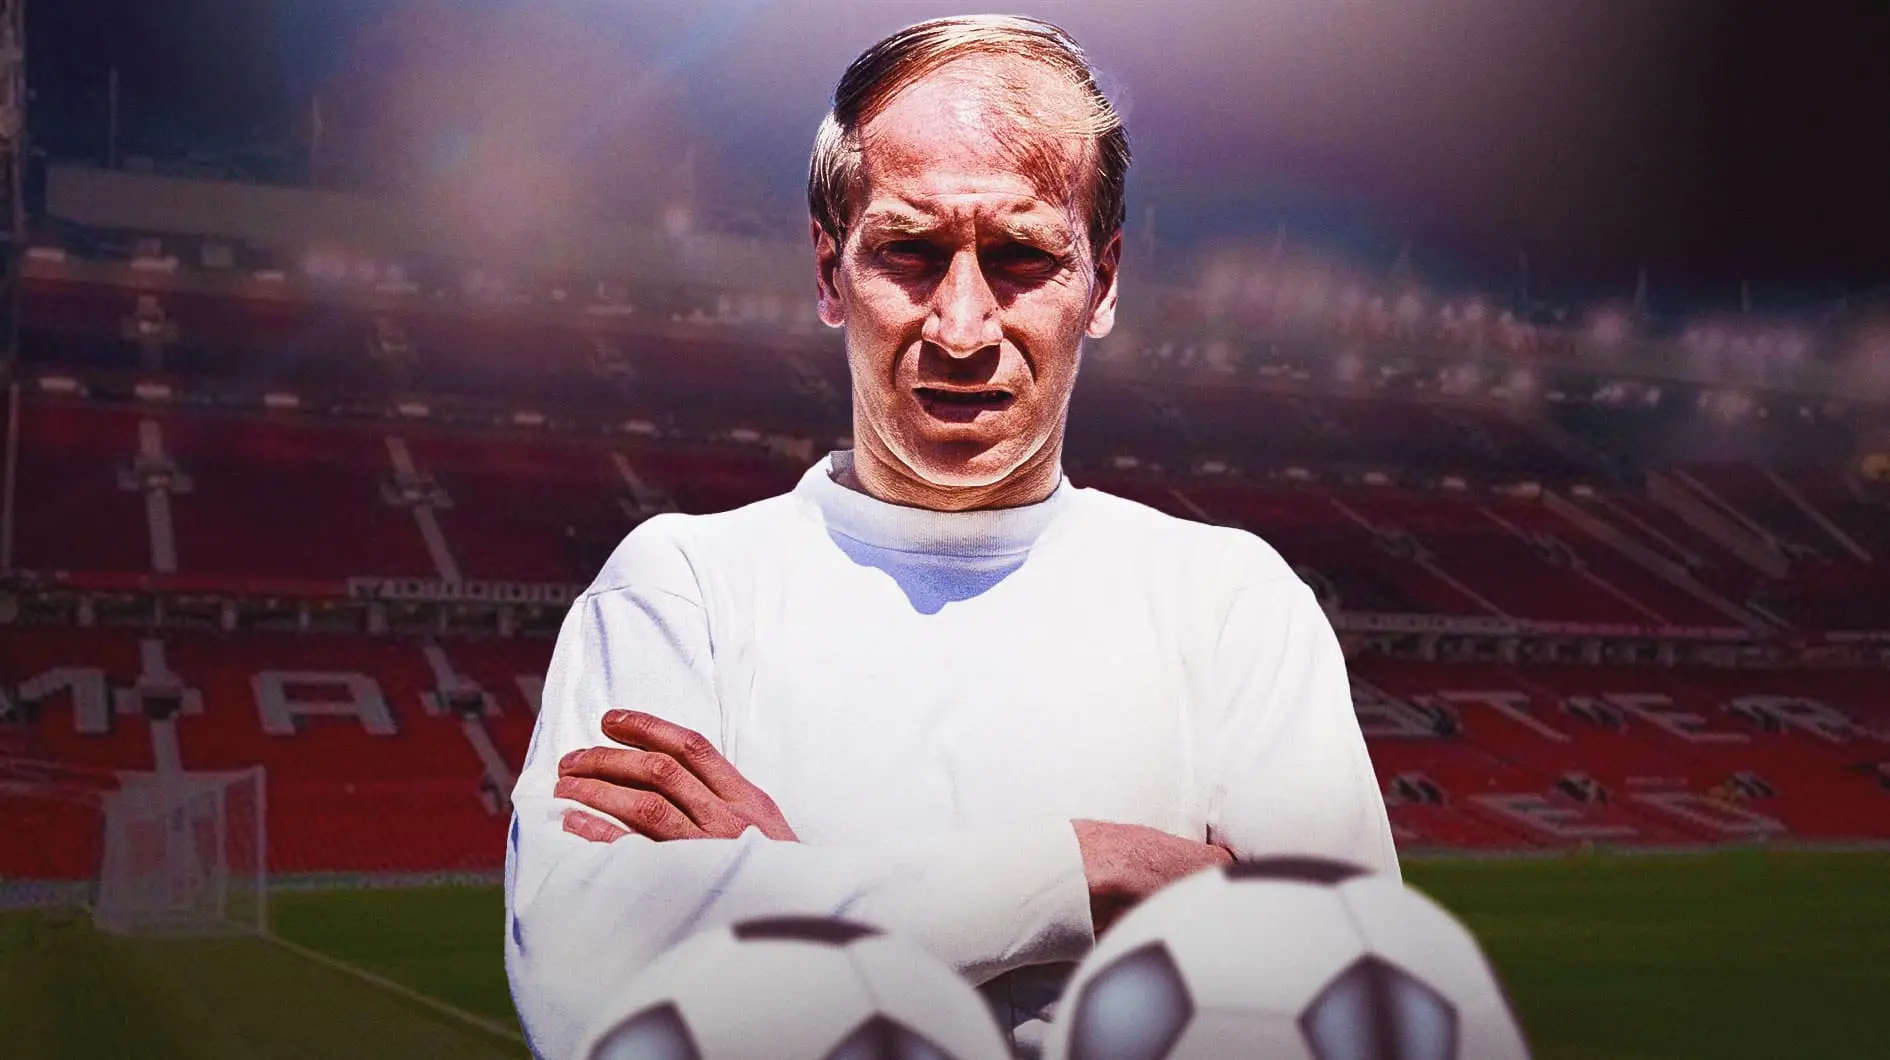 The Legendary Sir Bobby Charlton A Football Icon